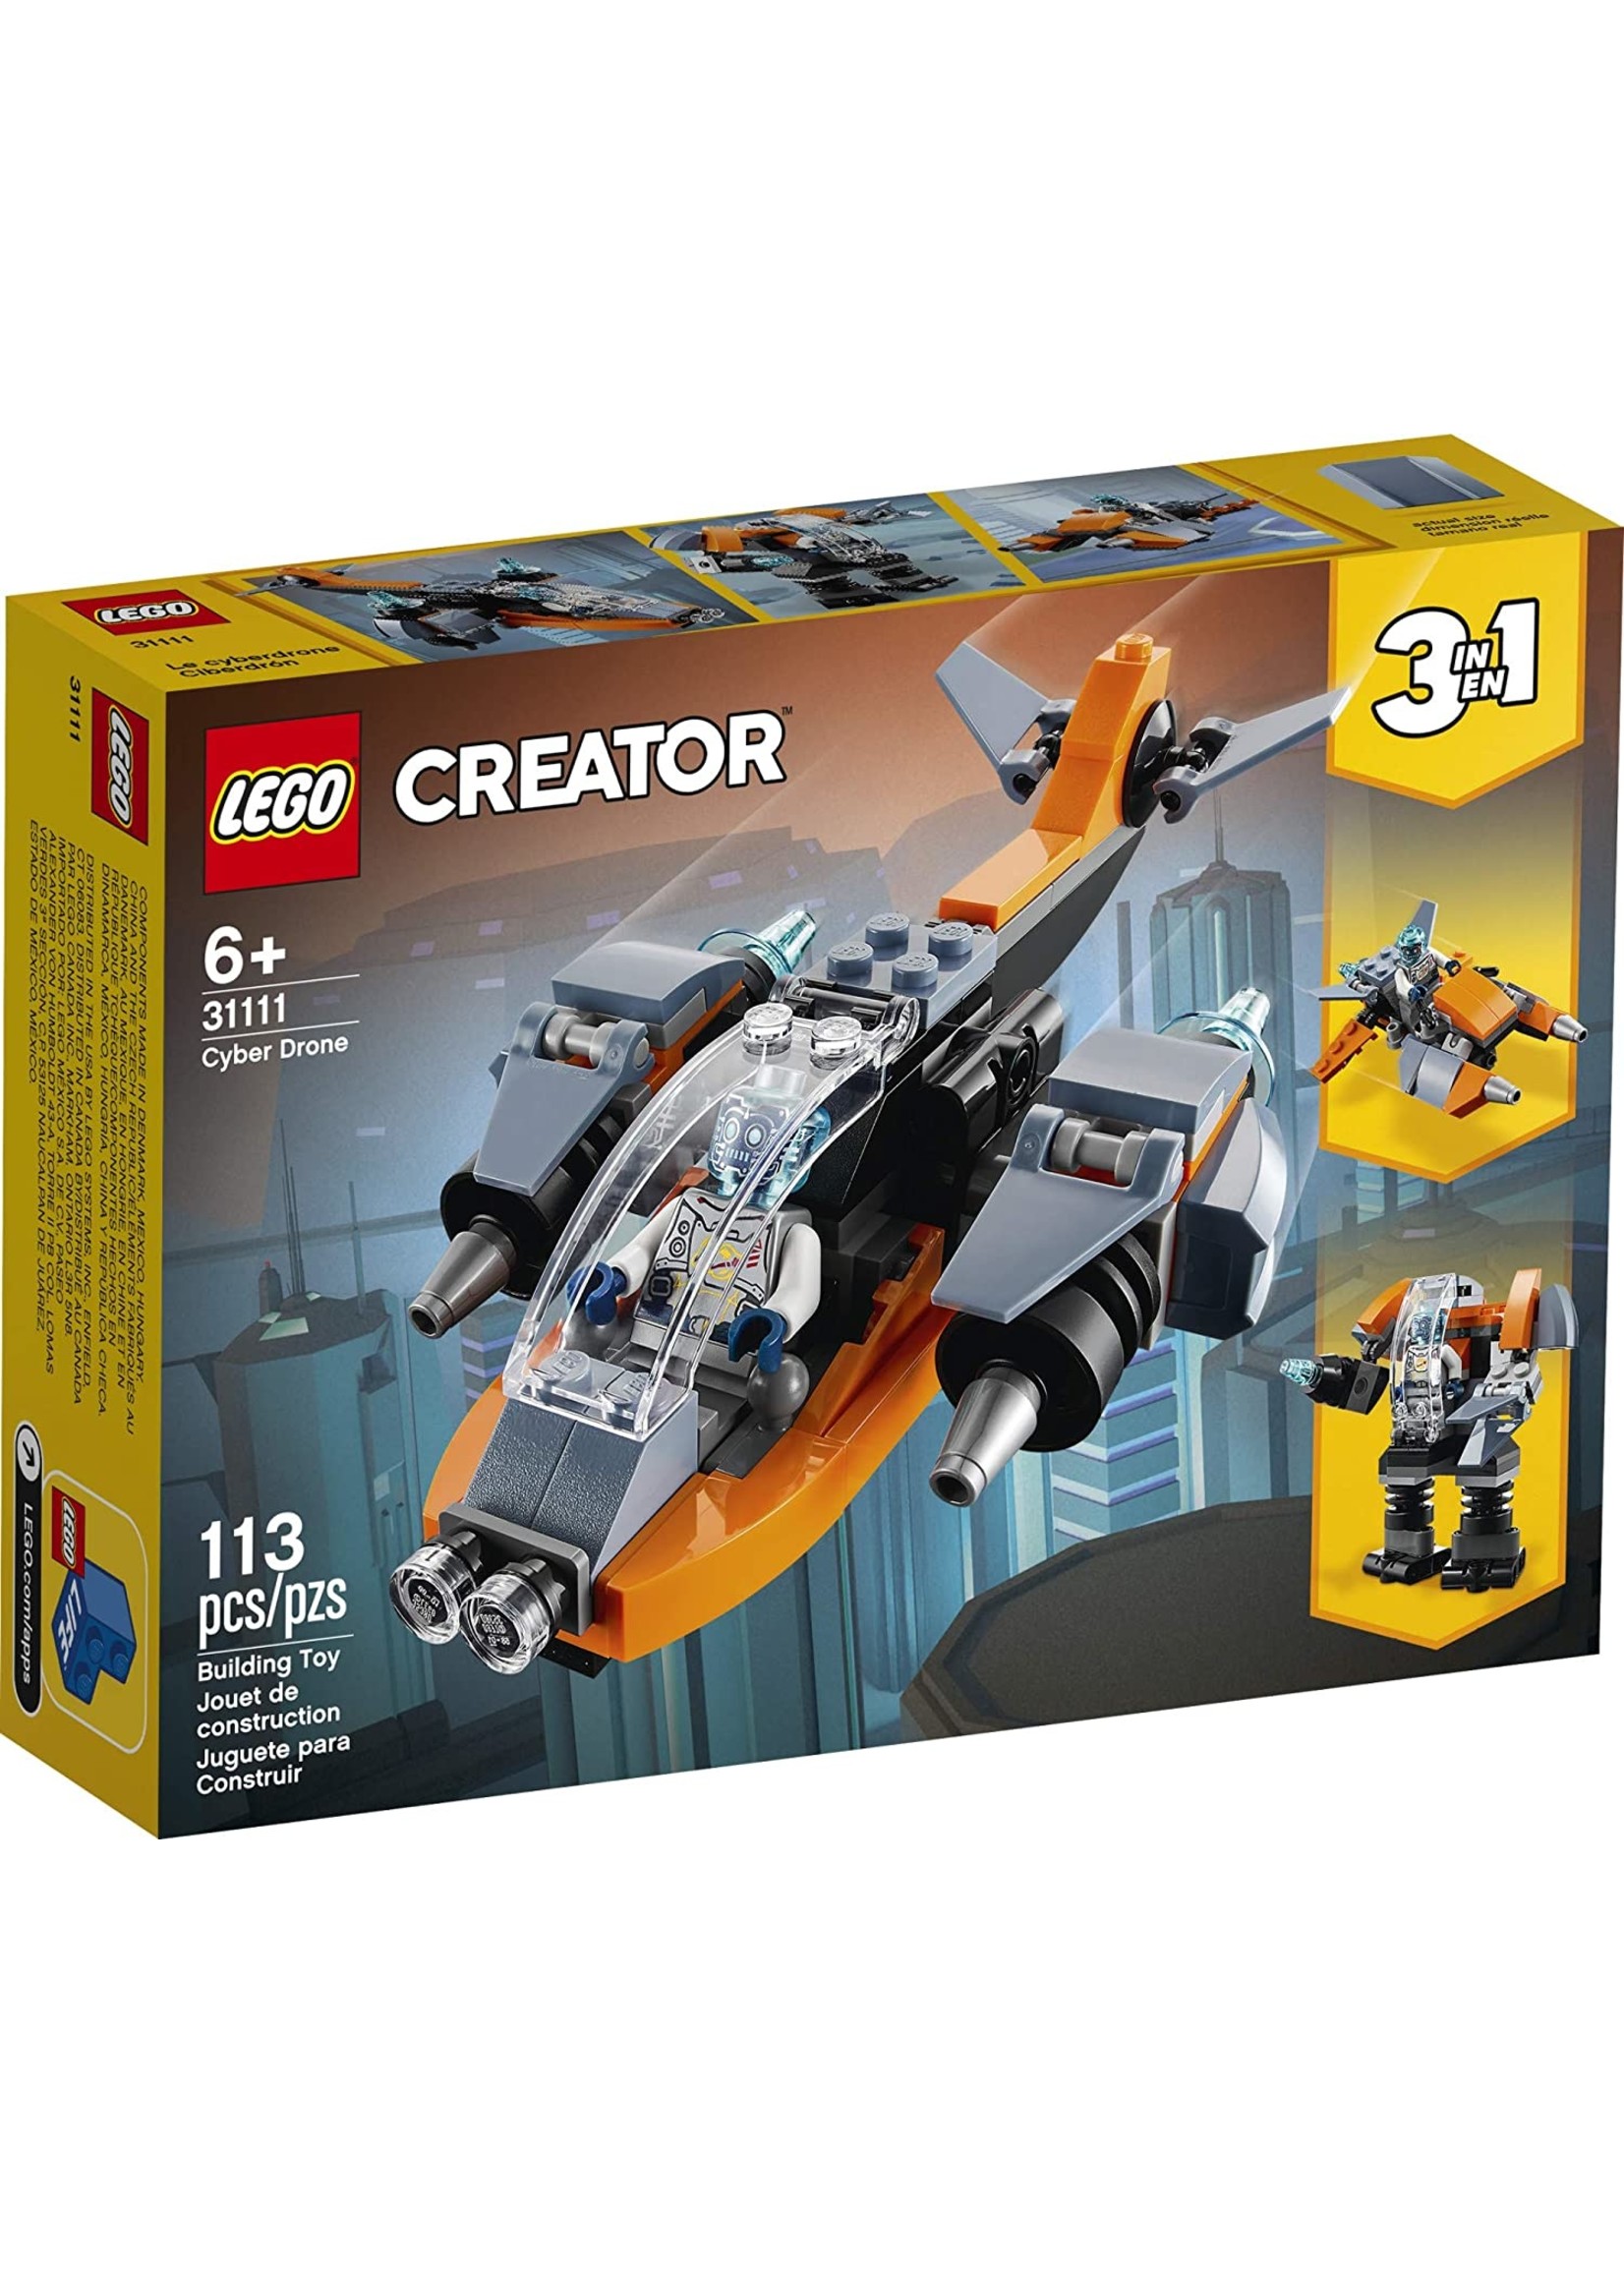 Lego Creator 31111 - Cyber Drone Hub Hobby